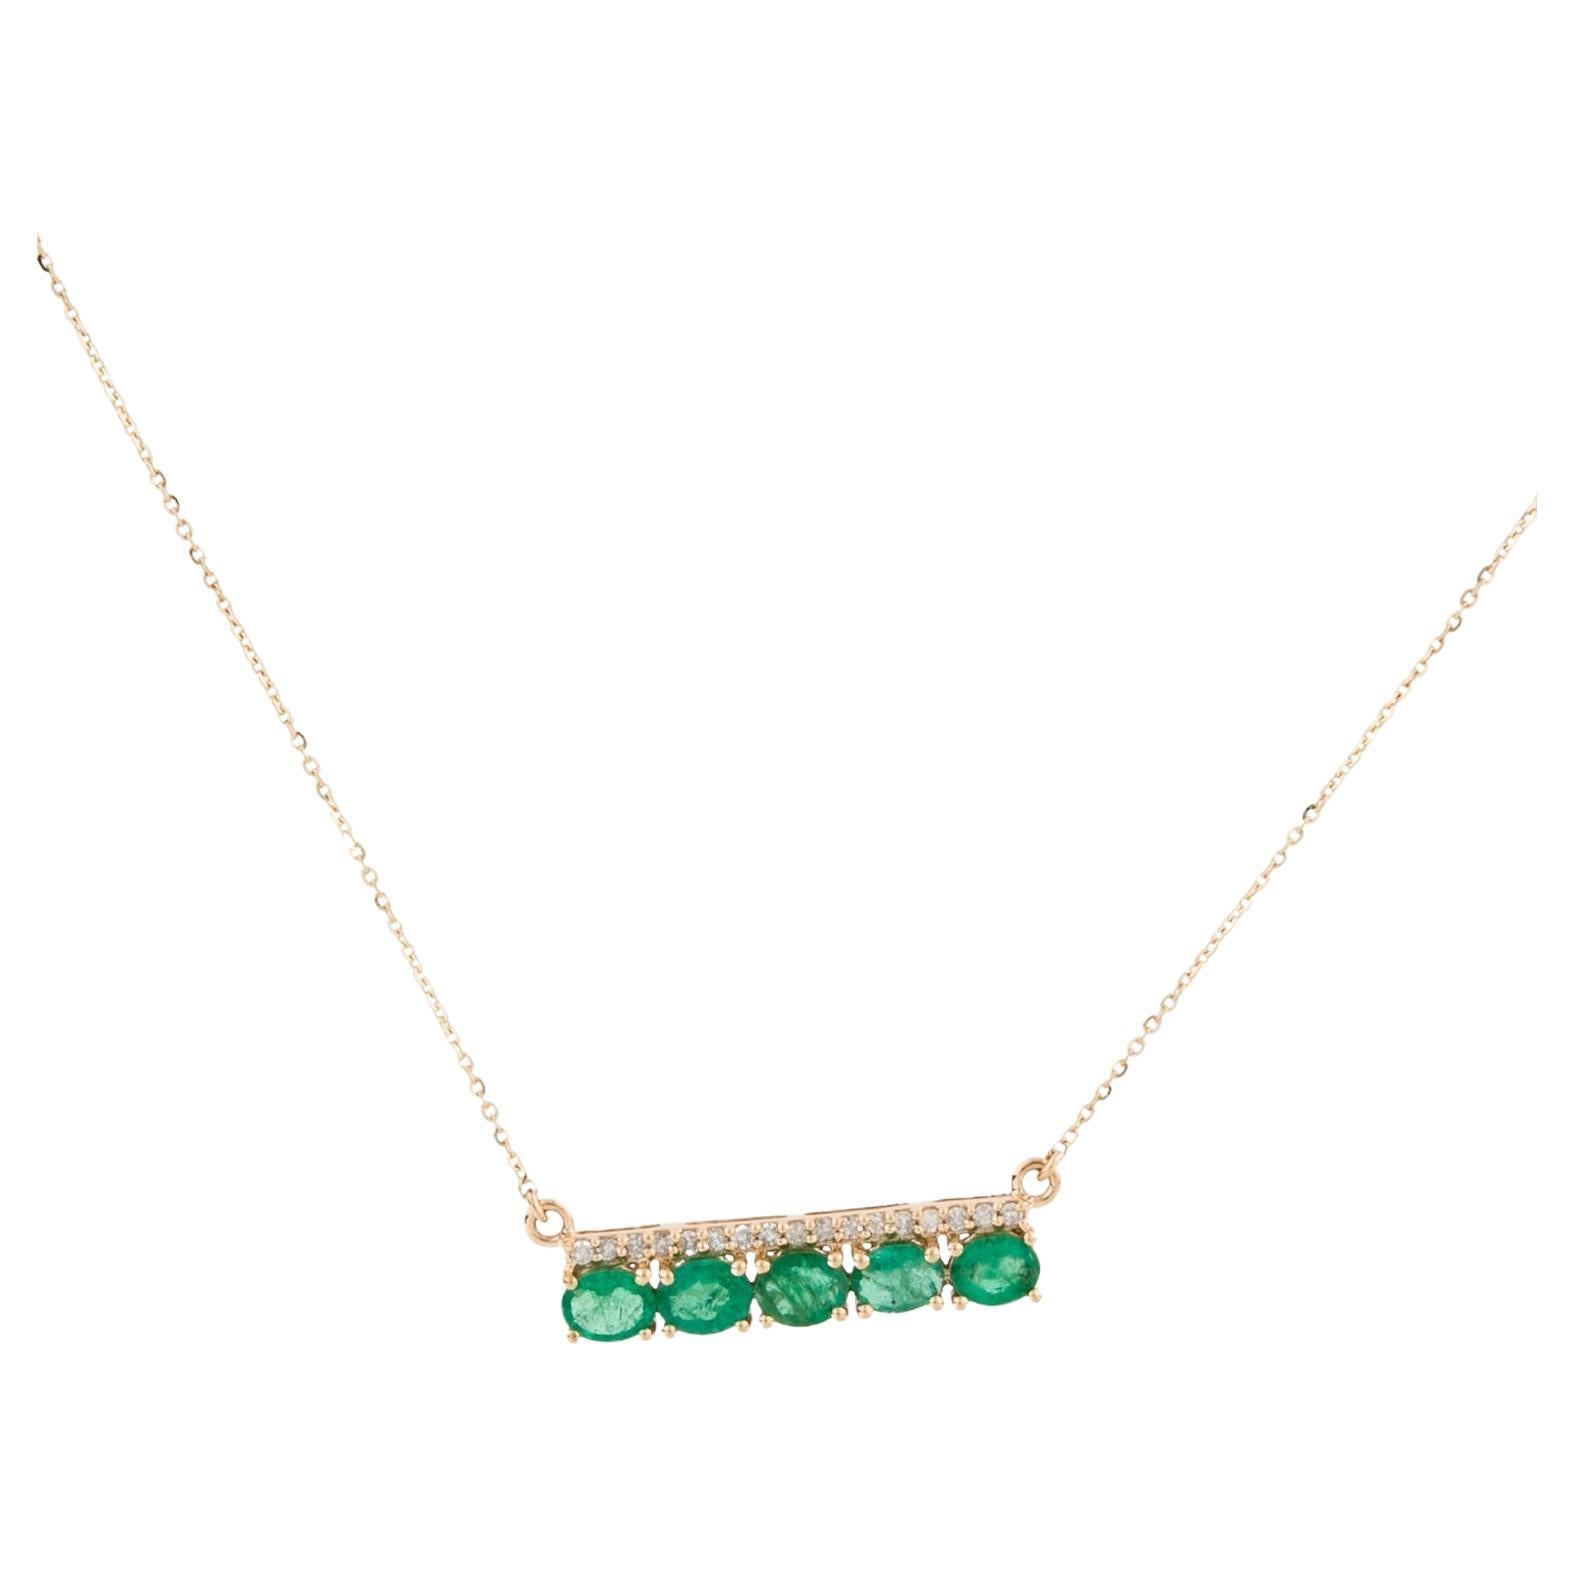 14K Emerald & Diamond Bar Pendant Necklace - Exquisite Gemstone Statement Piece For Sale